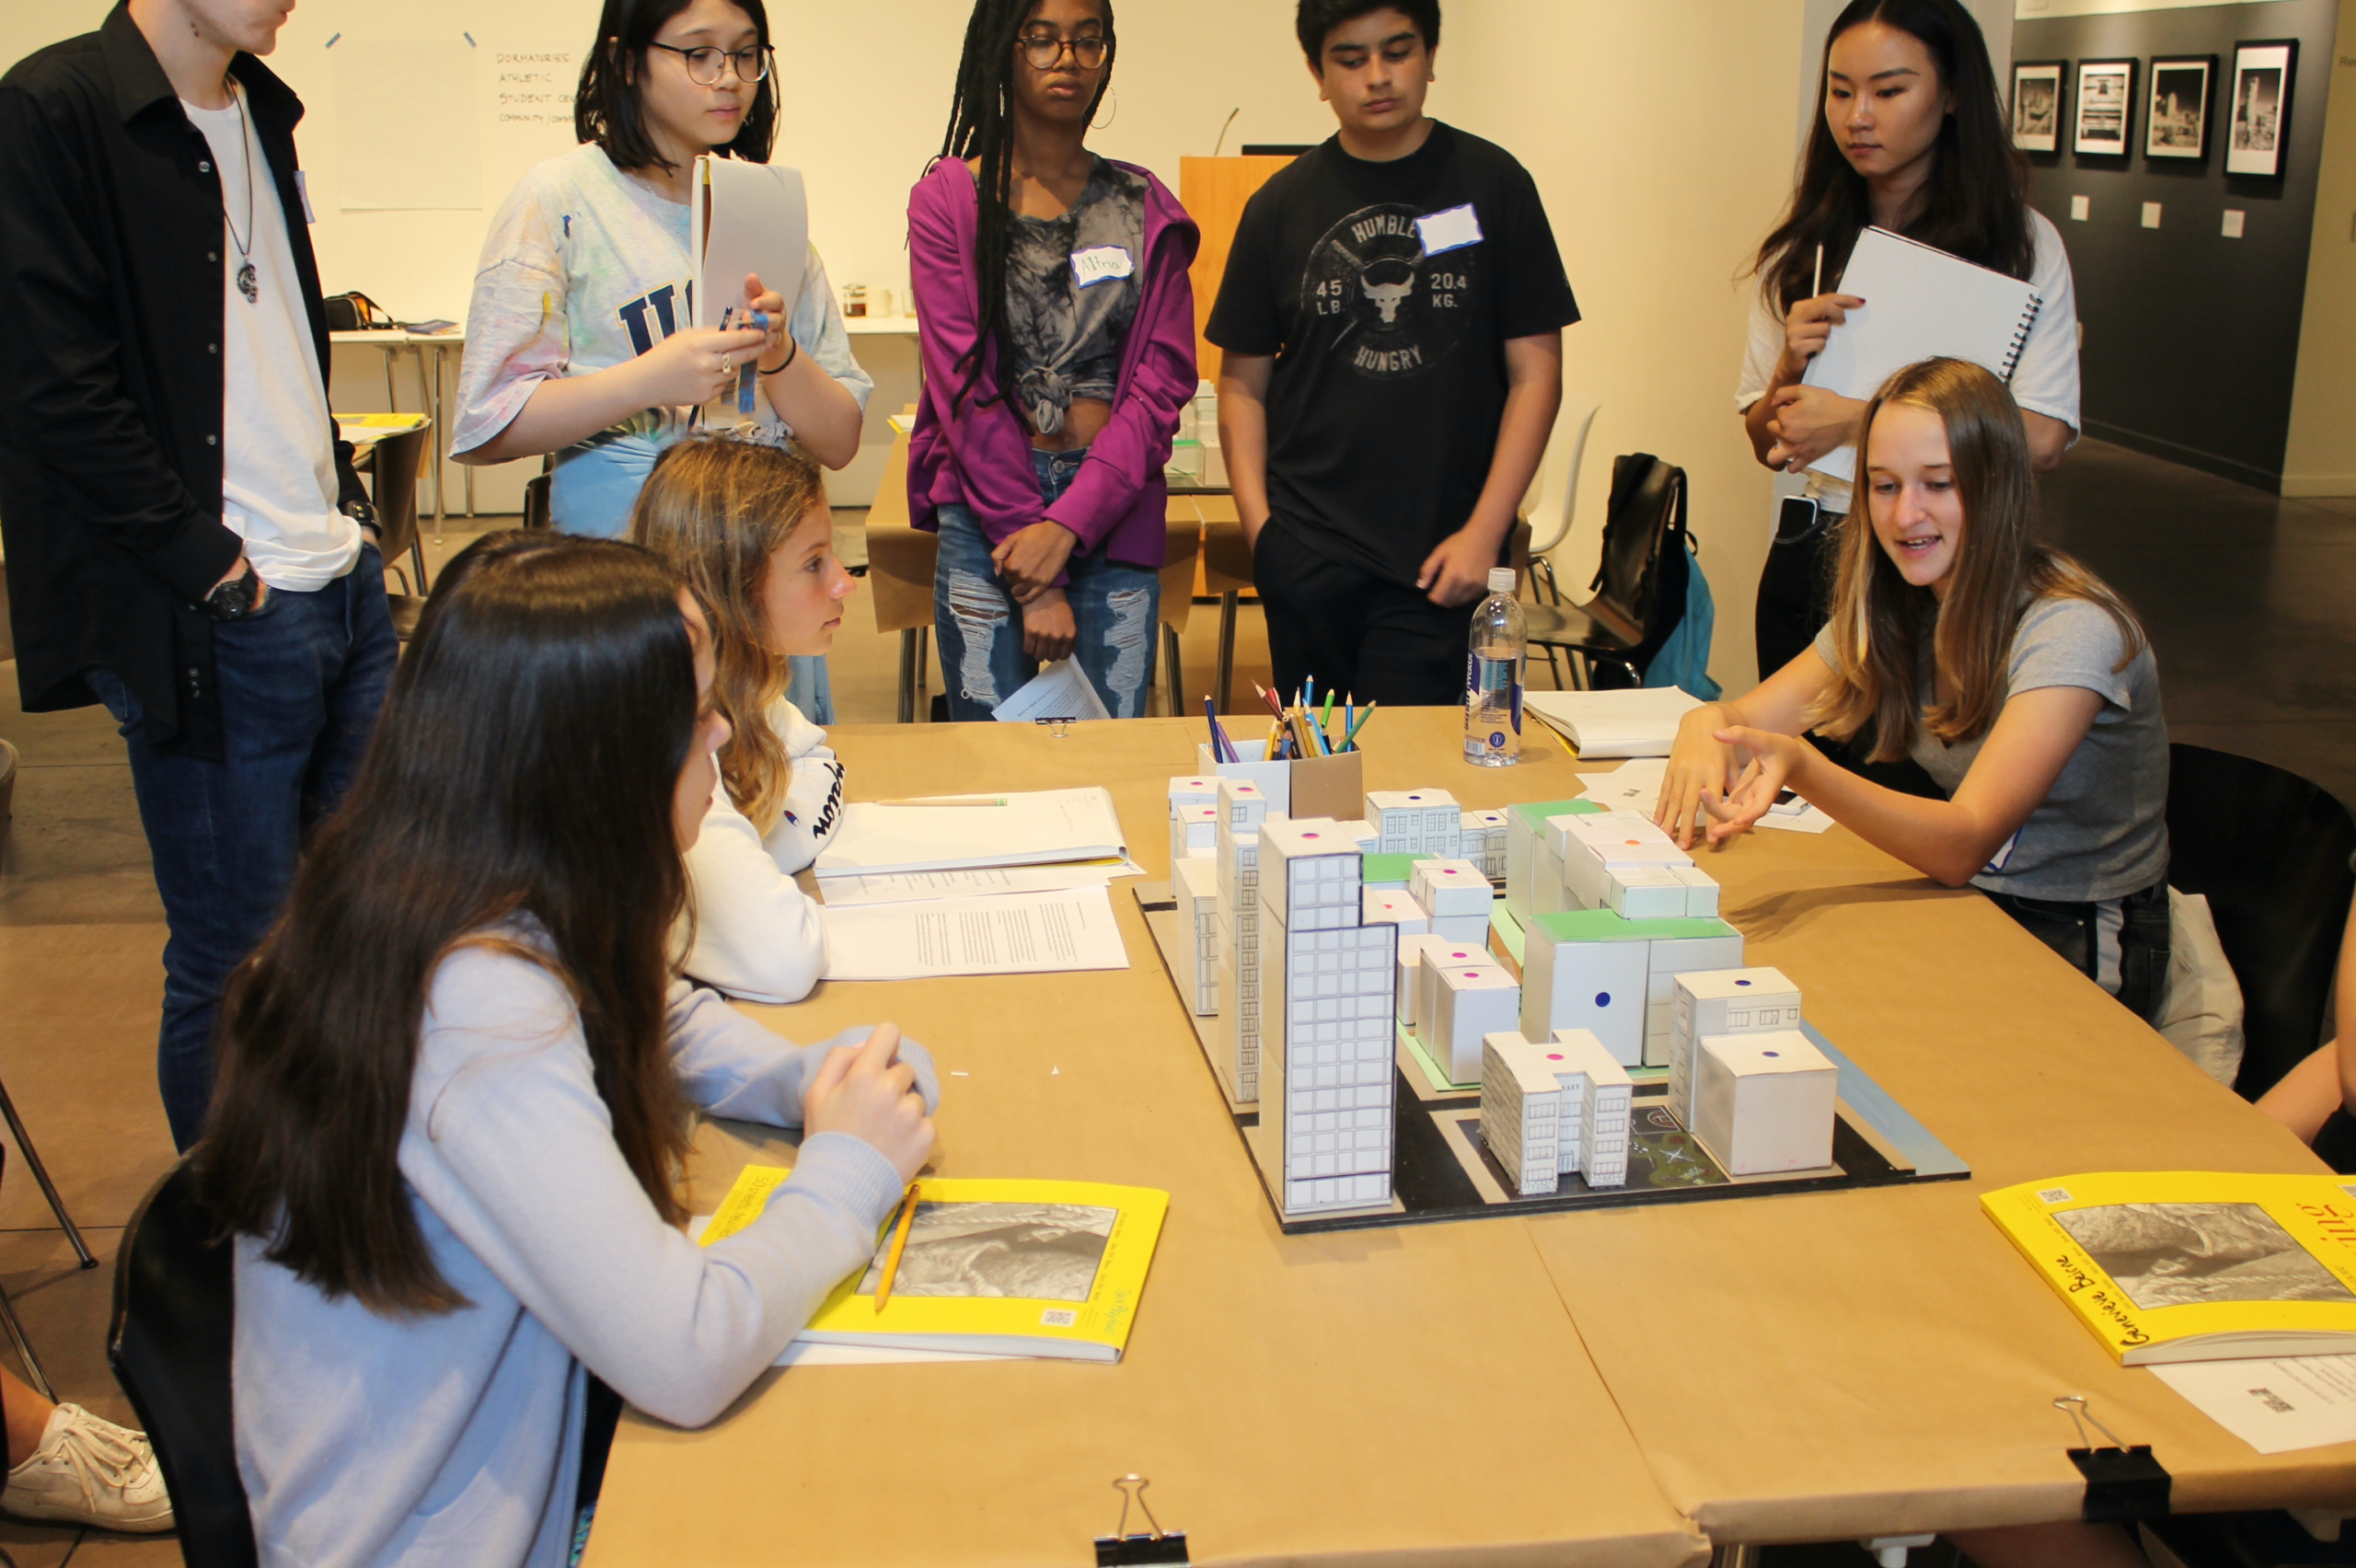 High School Students gathered around a box model of a neighborhood